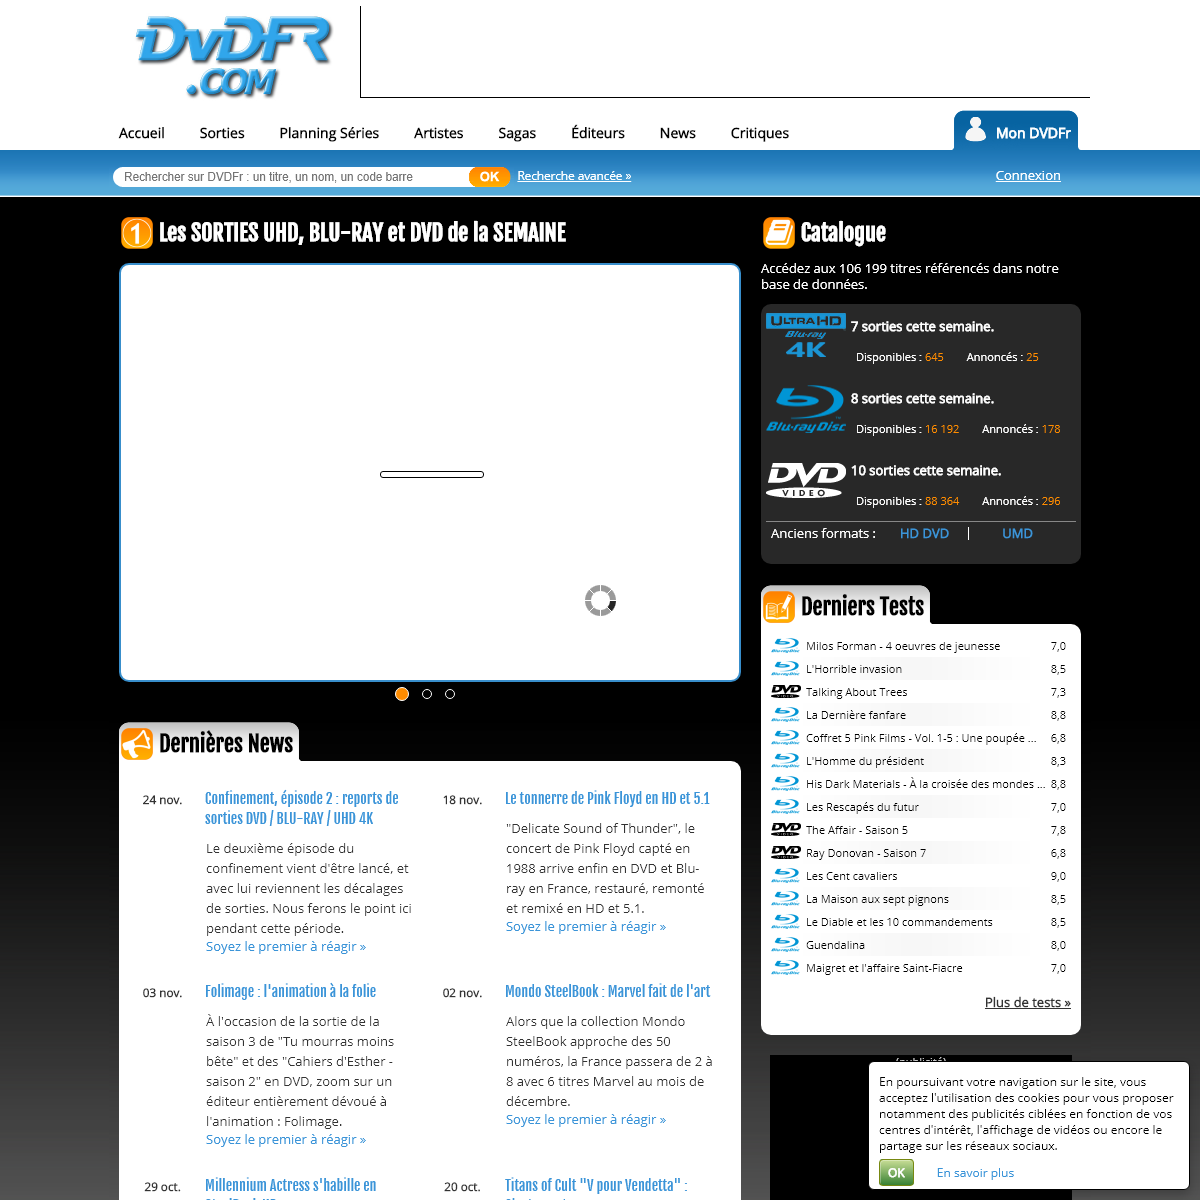 A complete backup of dvdfr.com